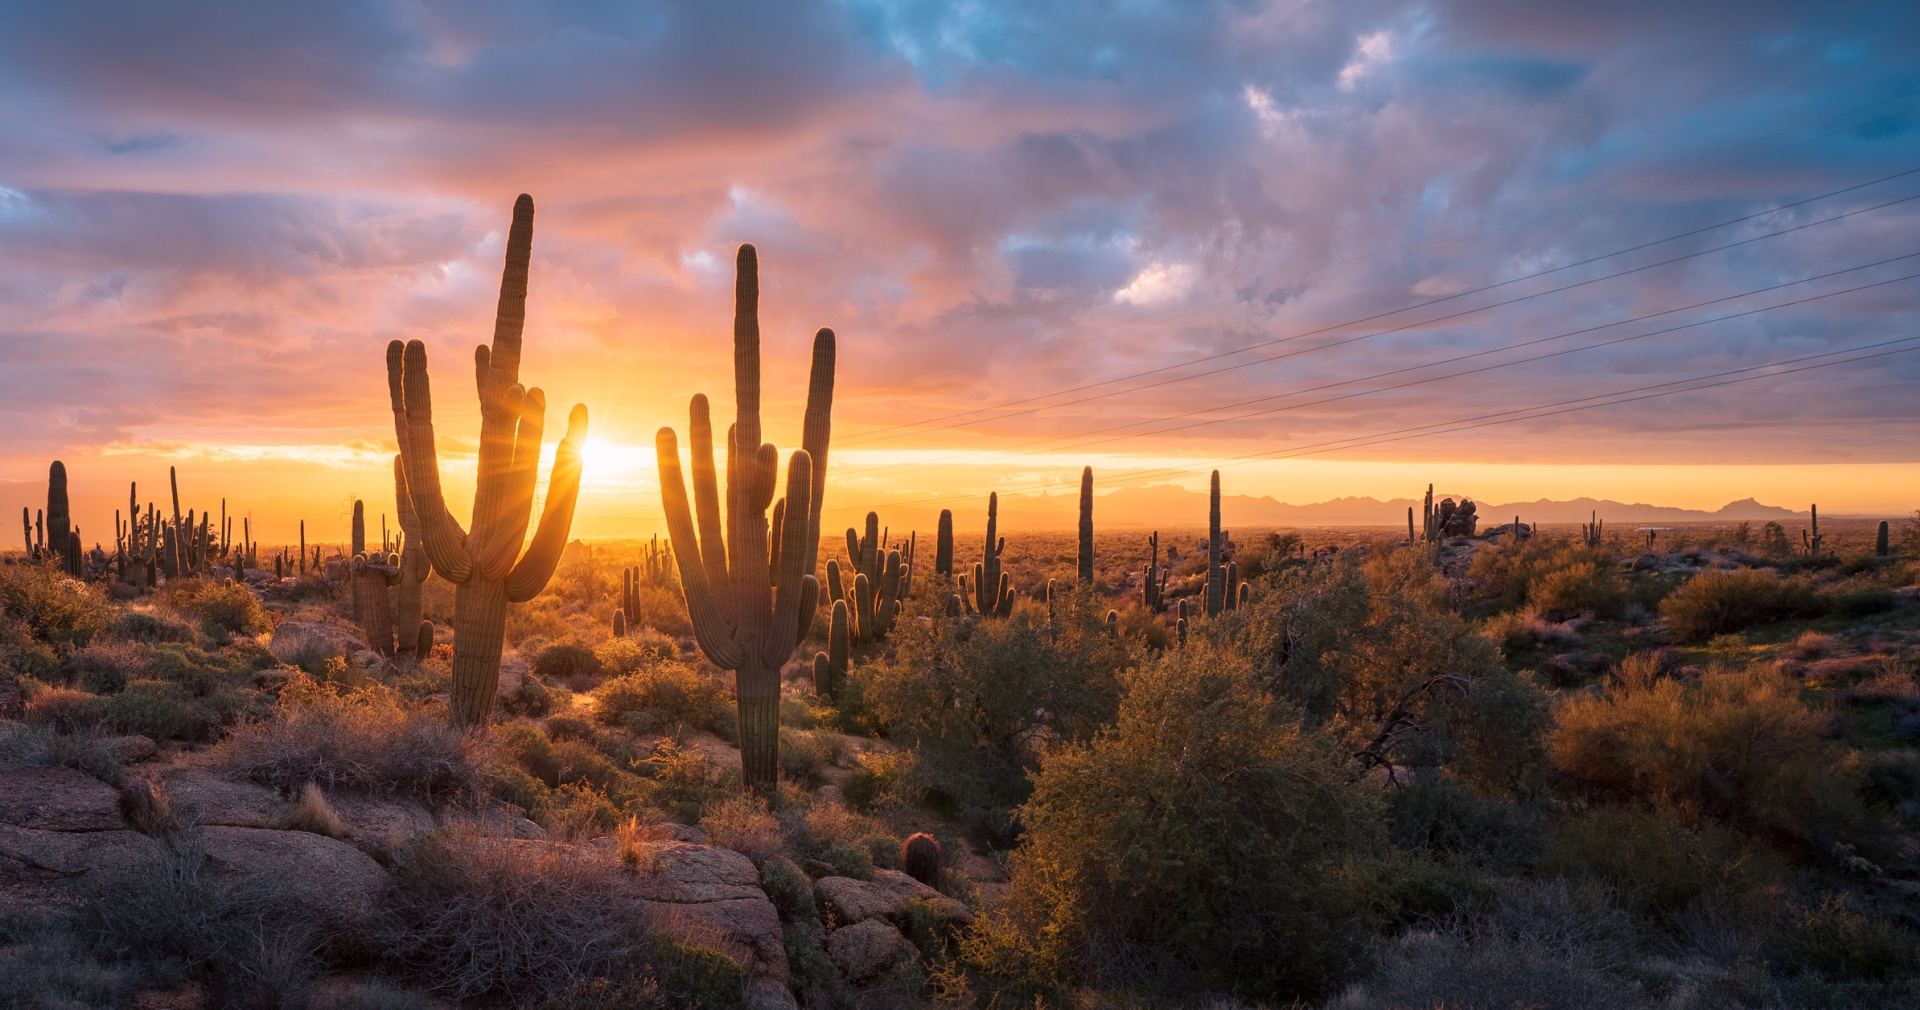 Two saguaro cacti lean in toward a fantastic sunrise from Granite Mountain in The McDowell Sonoran Preserve